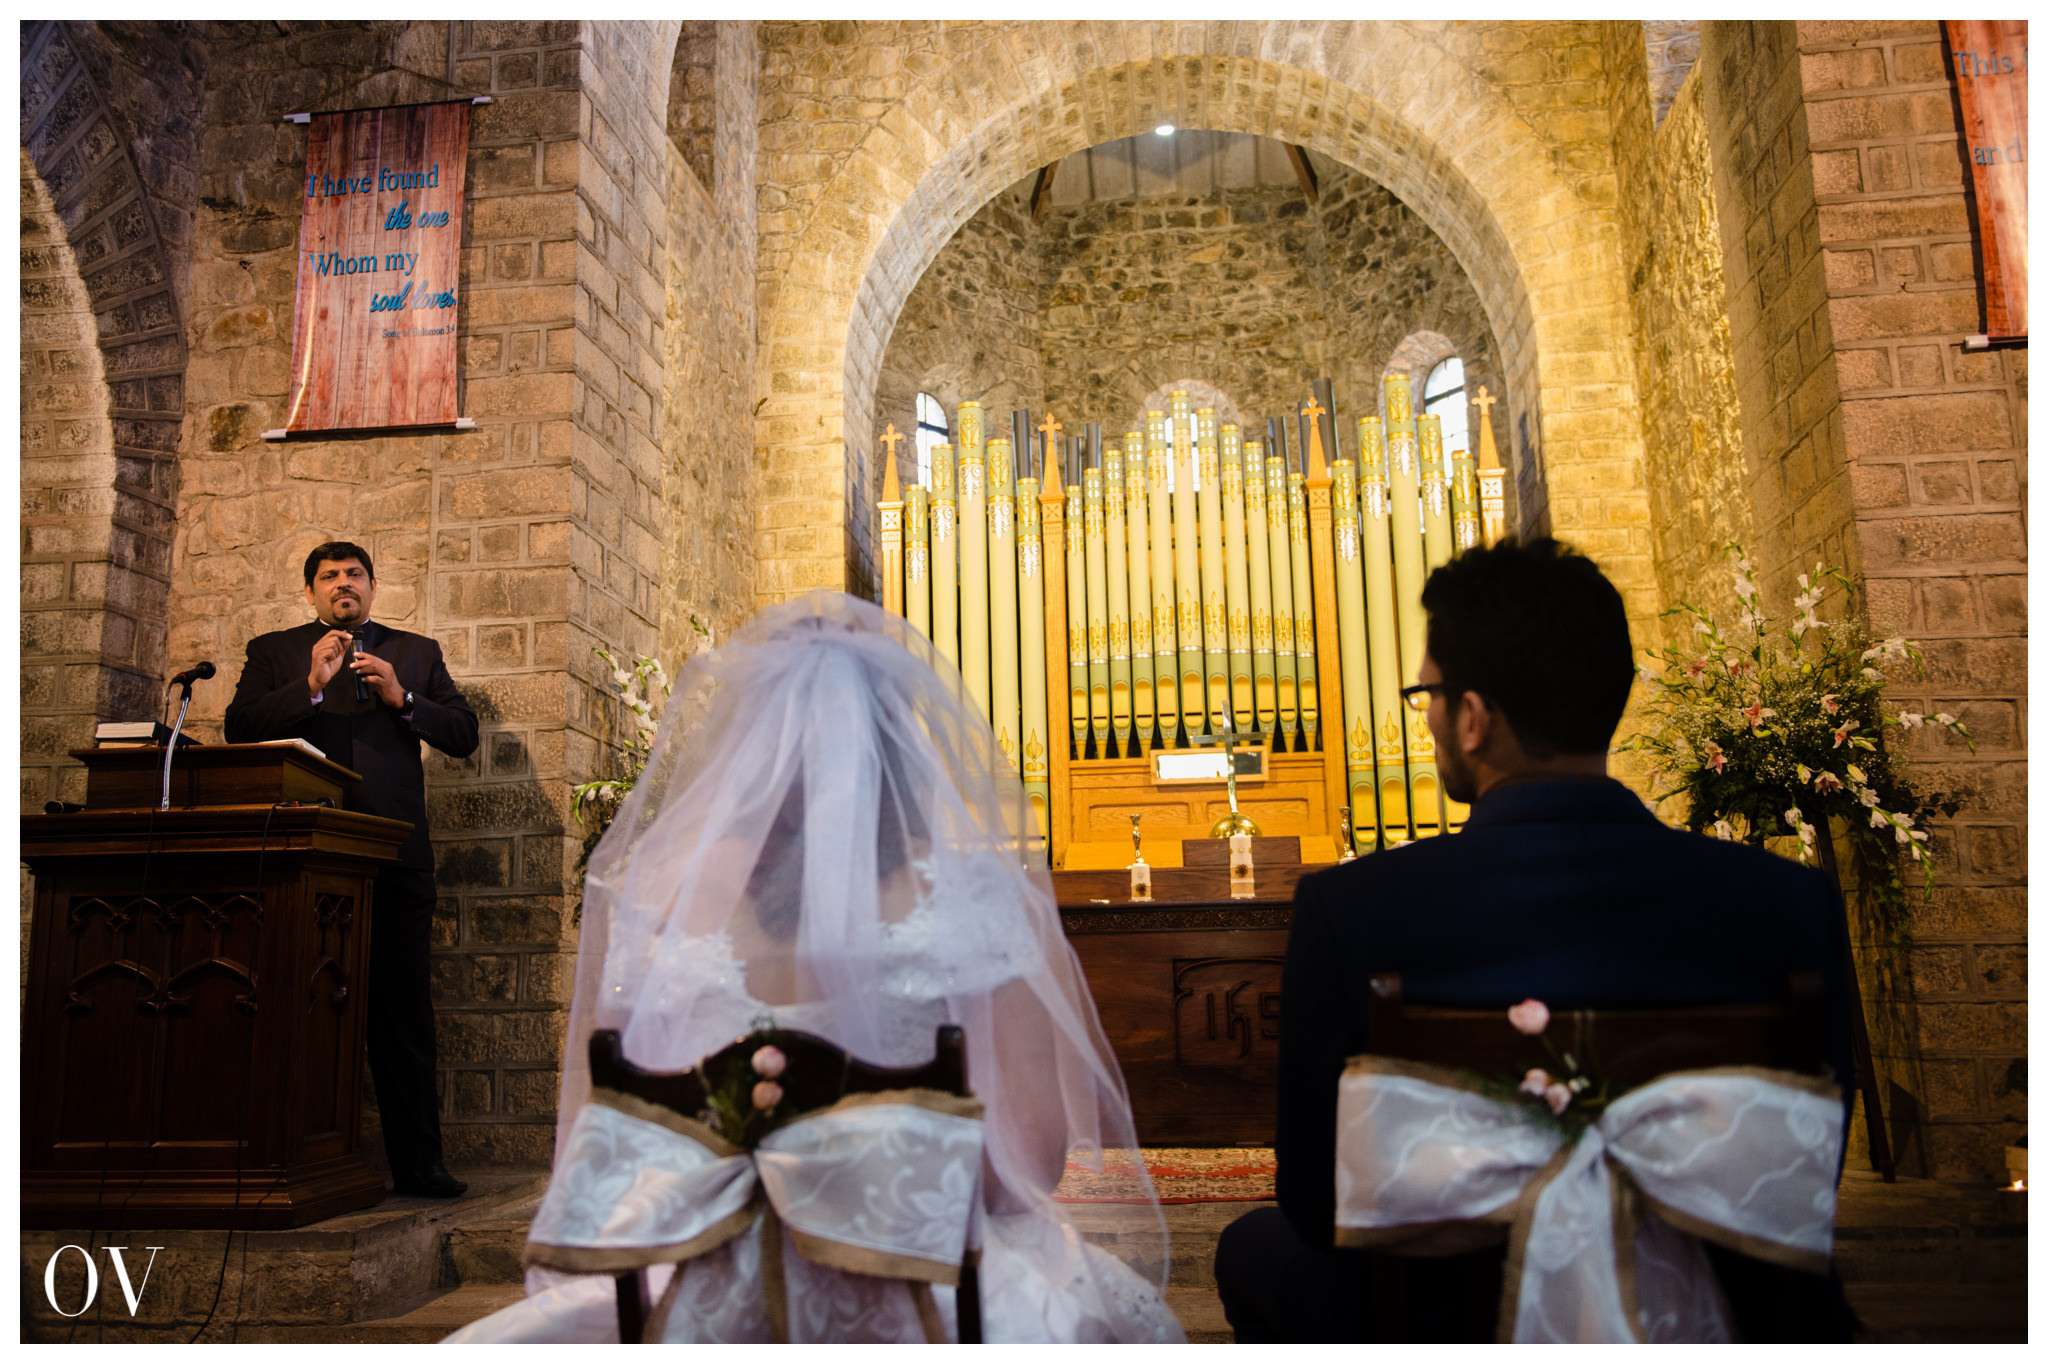 Israel Jordana-Kodaikanal Wedding-45.jpg